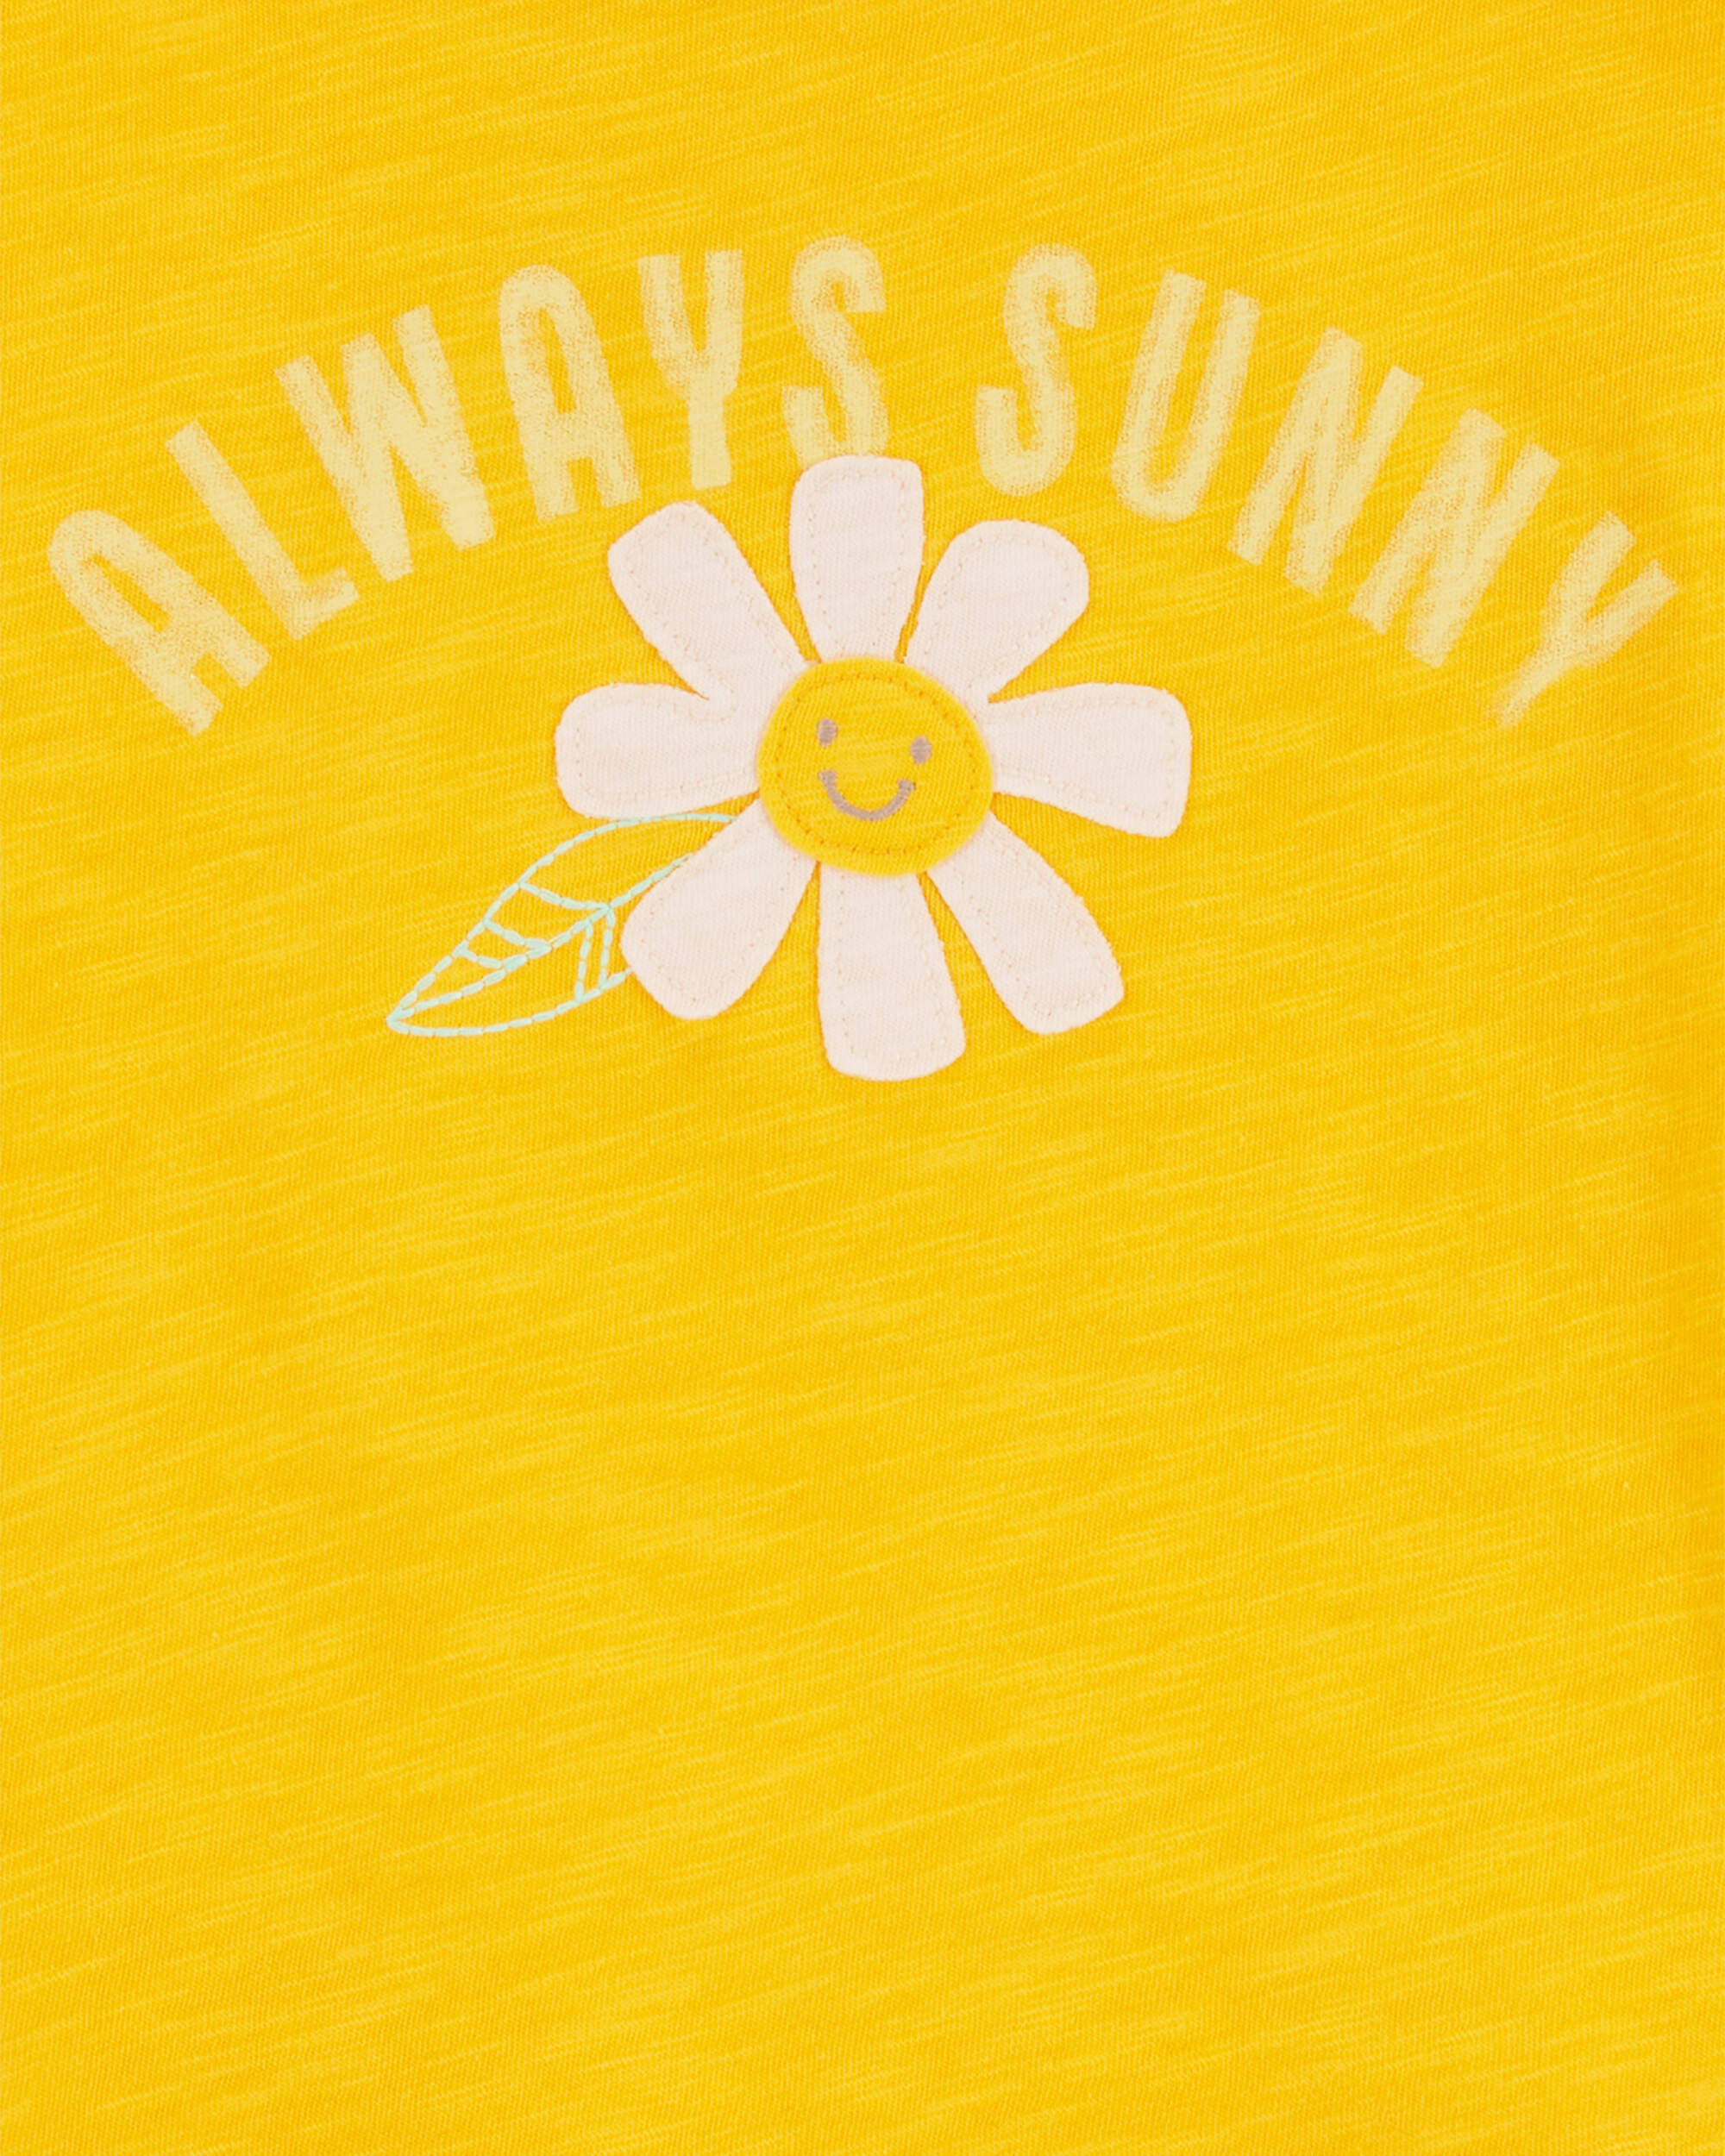 Baby Always Sunny Flower Tee